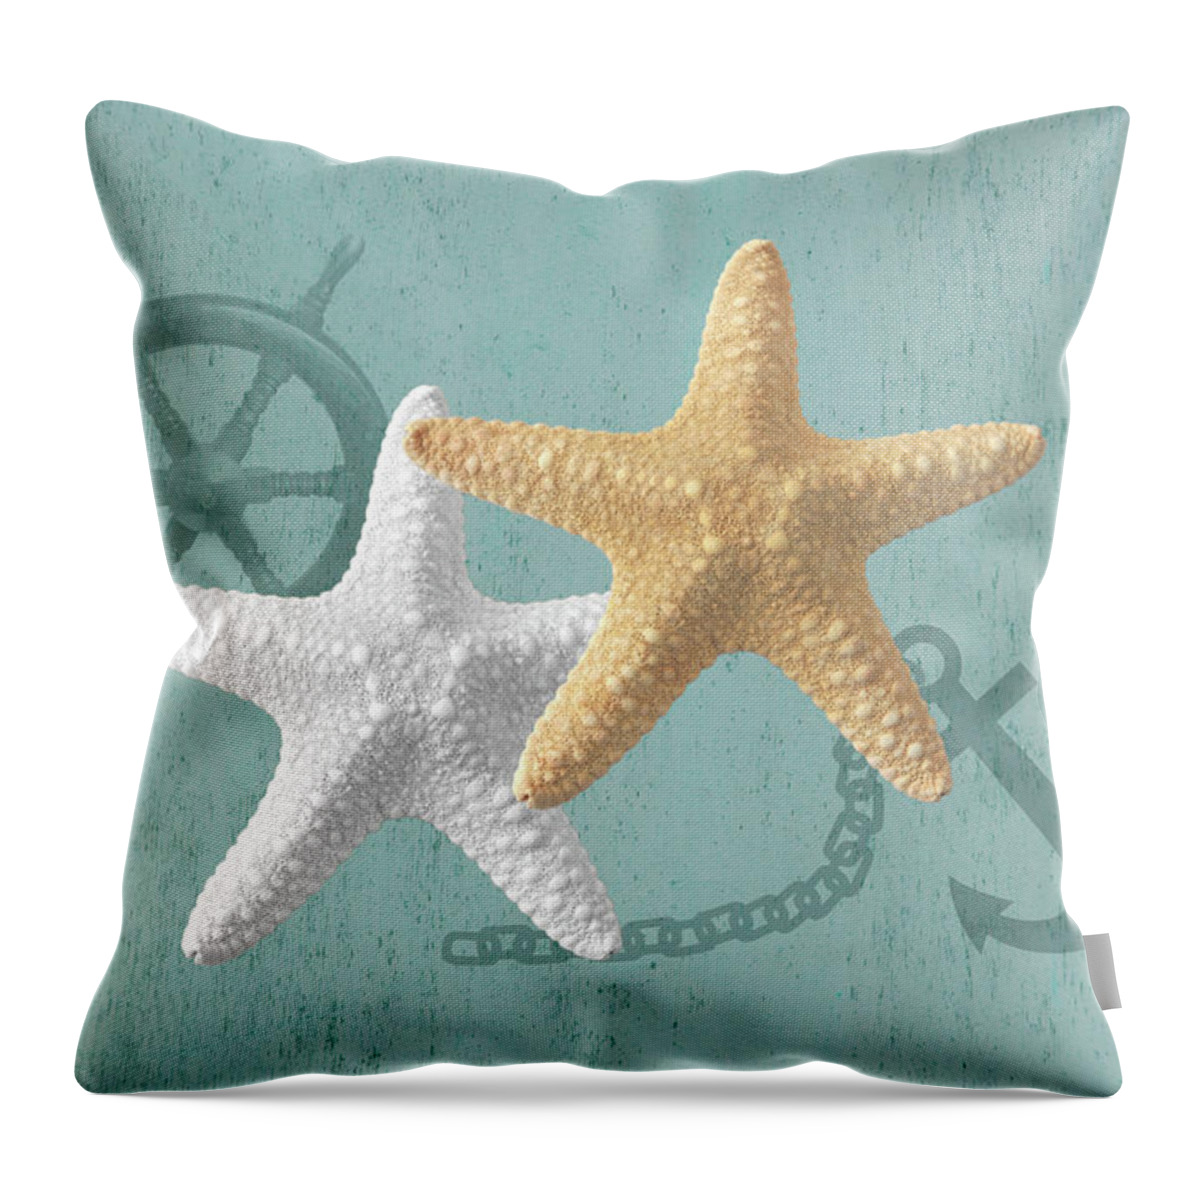 Sea Star Throw Pillow featuring the photograph Nautical Stars by Gill Billington